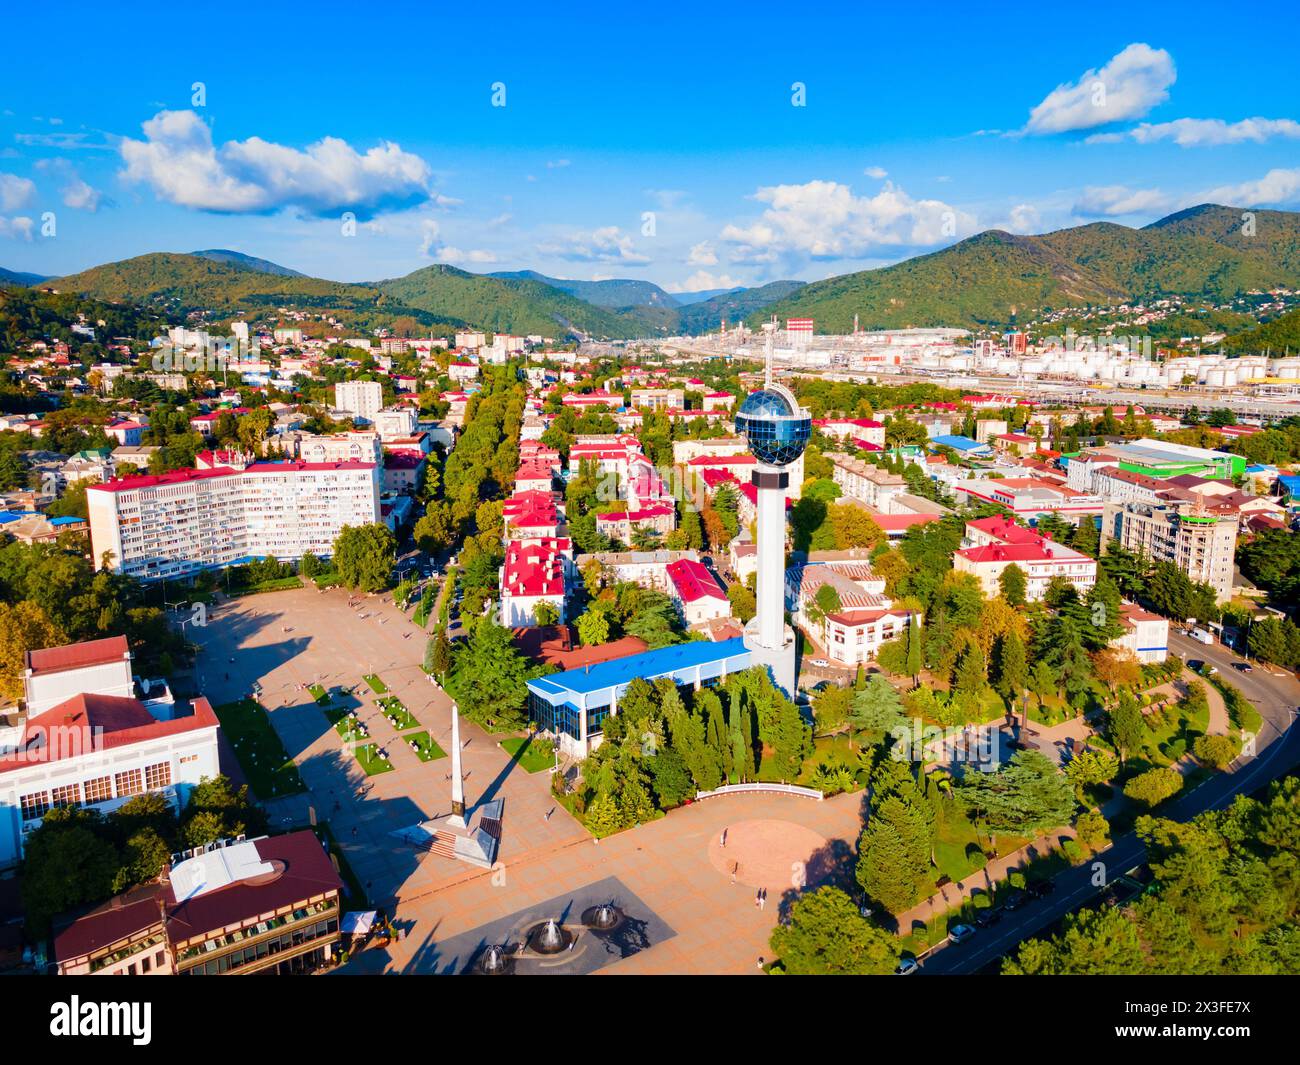 Tuapse aerial panoramic view. Tuapse is a resort town located on the Black Sea shore in Krasnodar Krai, Russia. Stock Photo